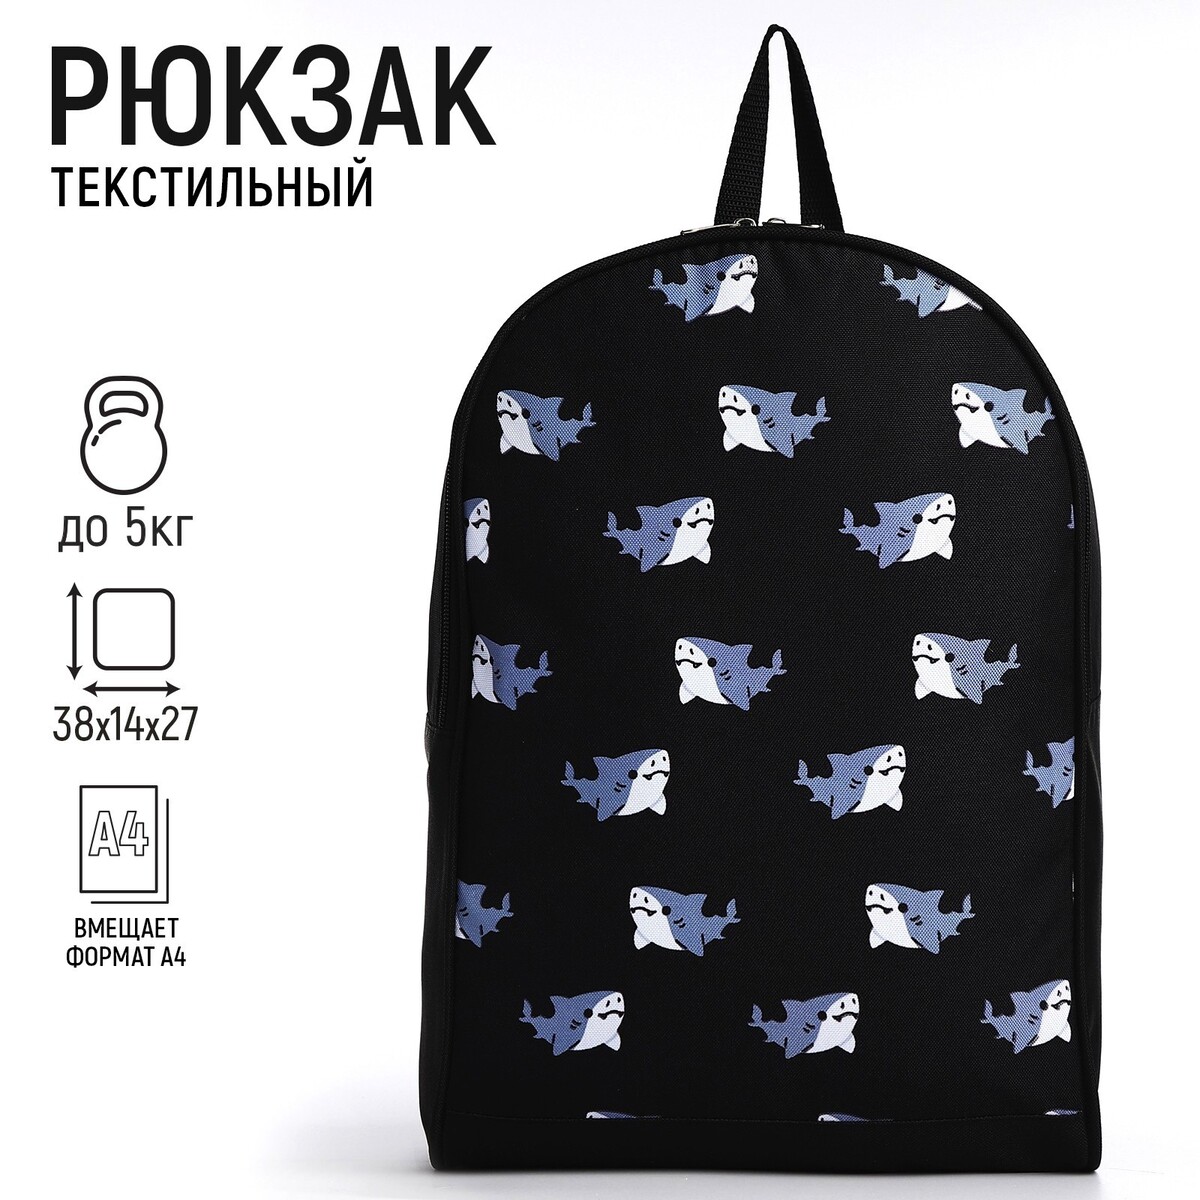 Рюкзак текстильный акулы, 38х14х27 см, цвет черный